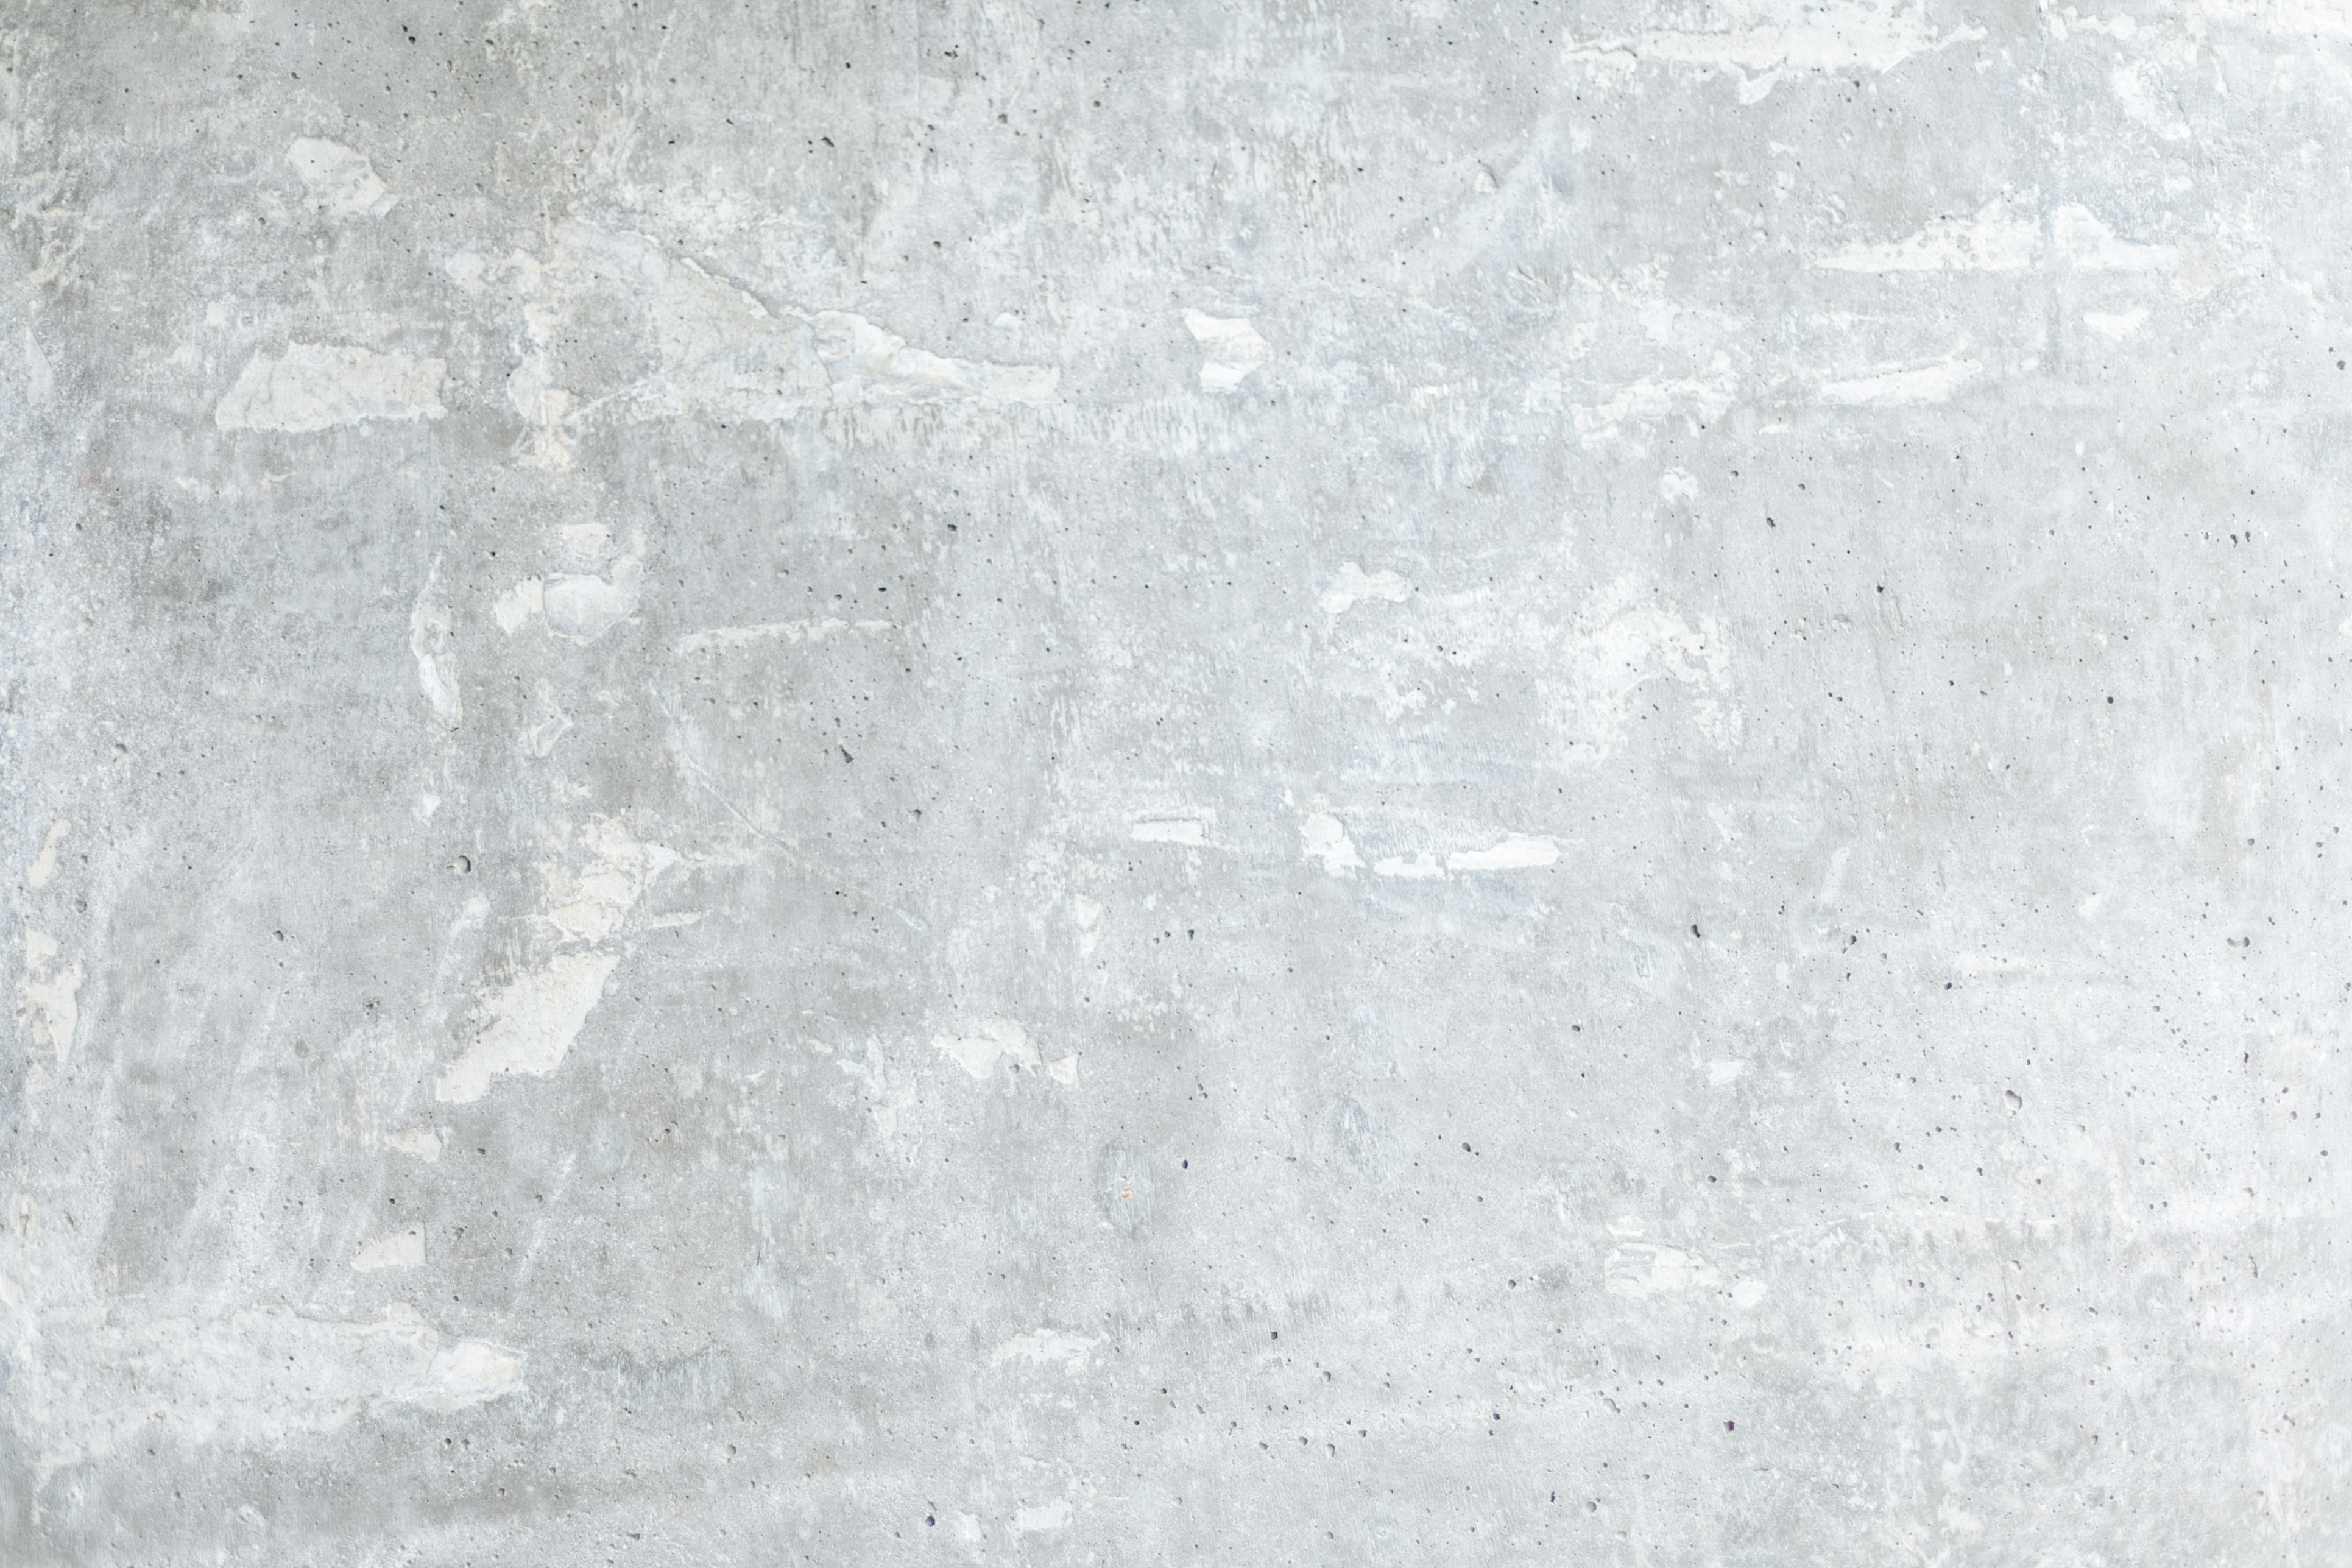 White concrete. Столешница 809 Mika бетон Троя. СБК столешницы бетон 809. Лофт бетон текстура бесшовная.